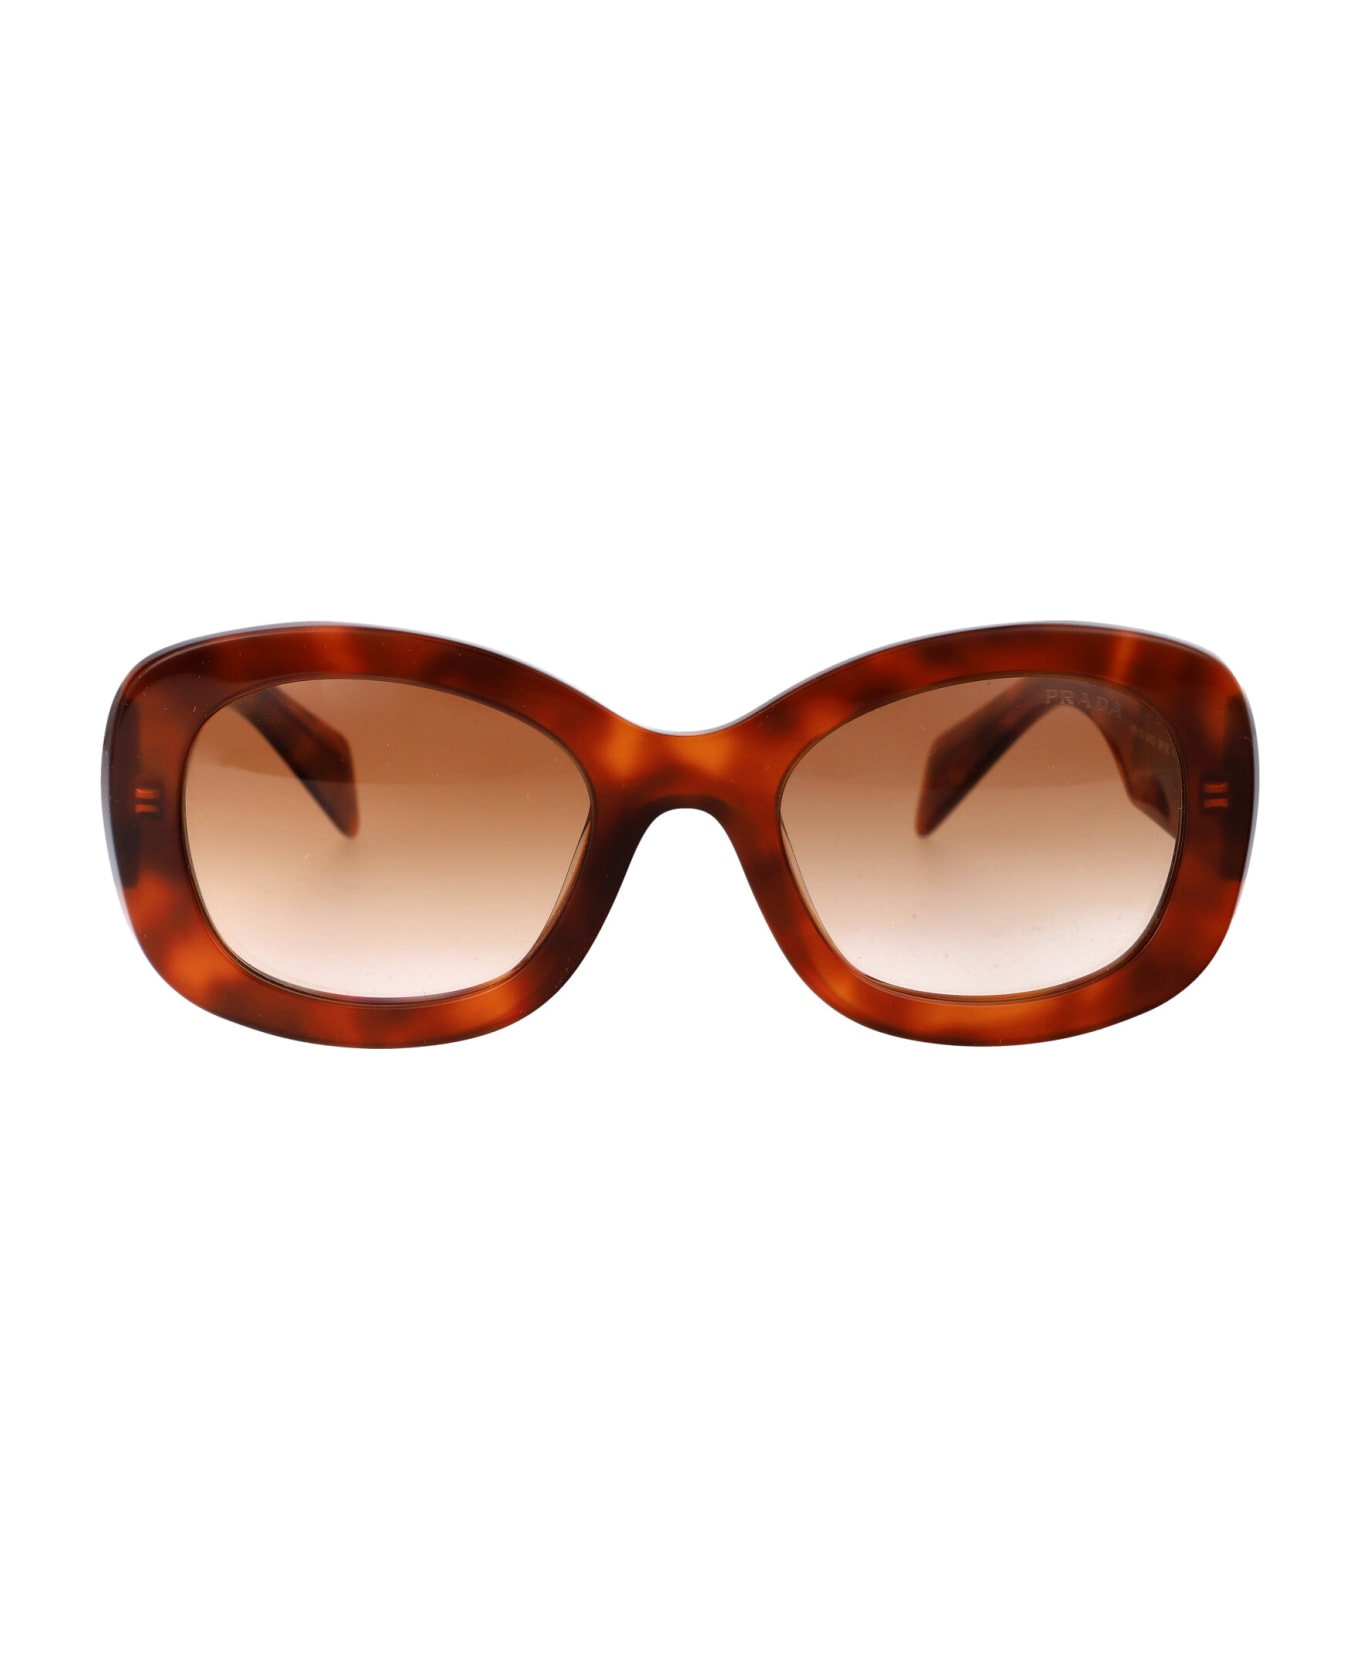 Prada Eyewear 0pr A13s Sunglasses - 18R70E Cognac Tortoise サングラス